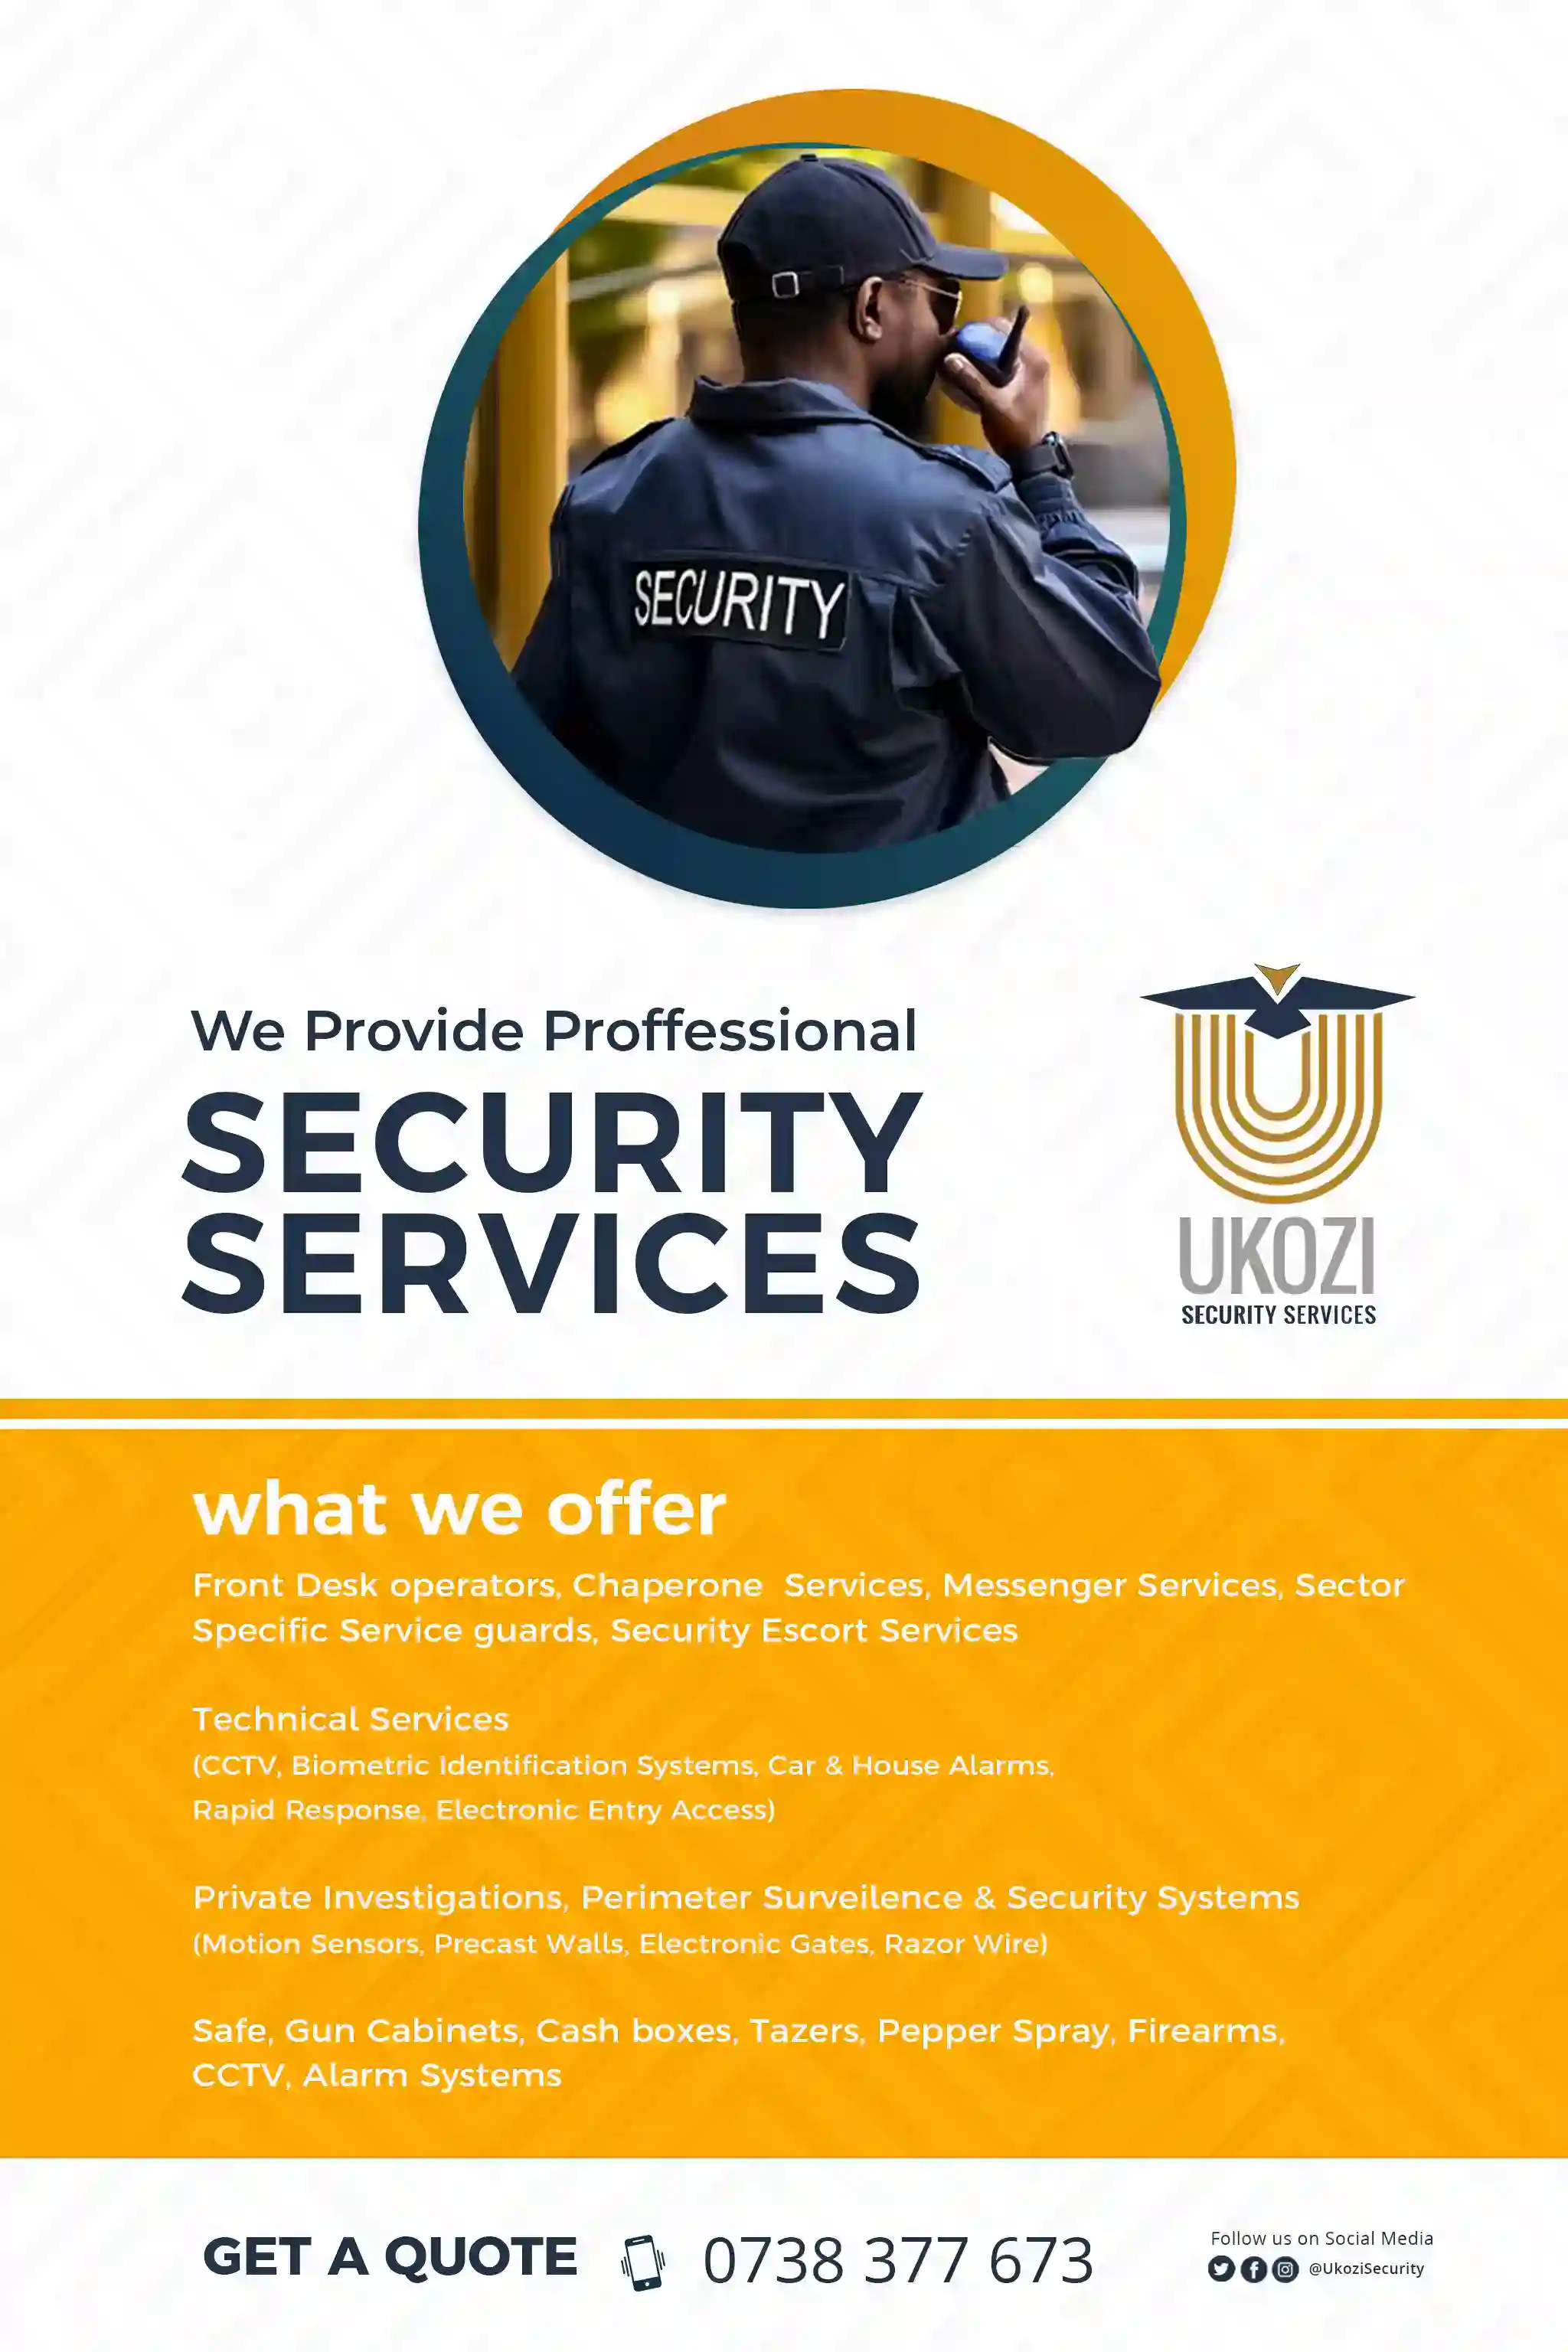 Ukozi Security Services